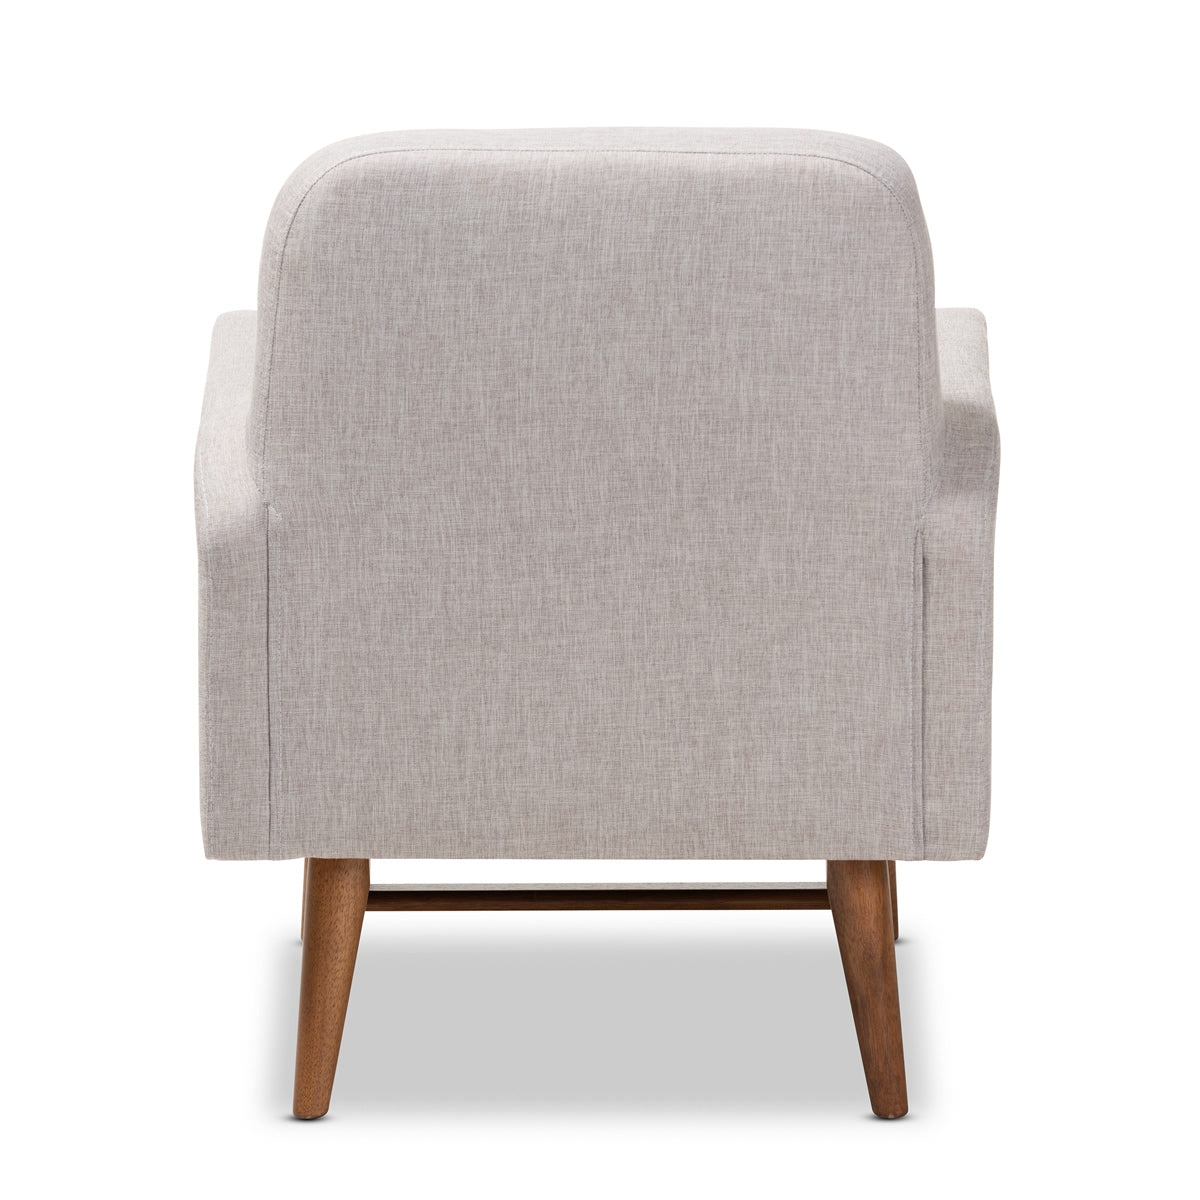 Baxton Studio Perrine Mid-Century Modern Greyish Beige Fabric Upholstered Walnut-Finished Wood Lounge Chair Baxton Studio-chairs-Minimal And Modern - 4